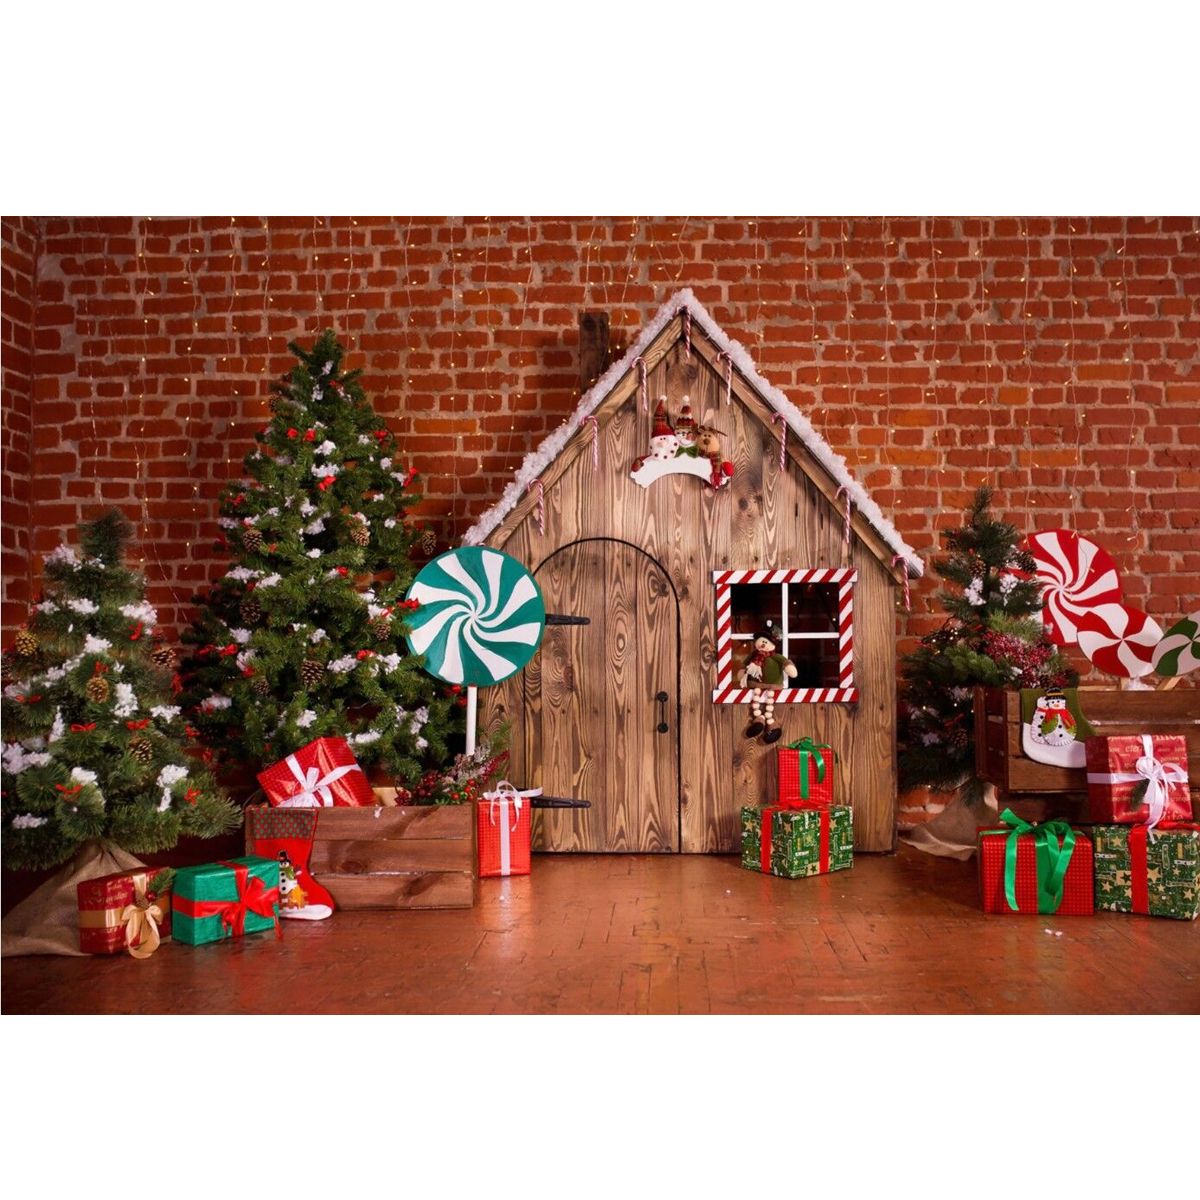 5x7FT-Vinyl-Christmas-Tree-Cabin-Candy-Bar-Brick-Wall-Photography-Backdrop-Backgrpound-Studio-Prop-1413695